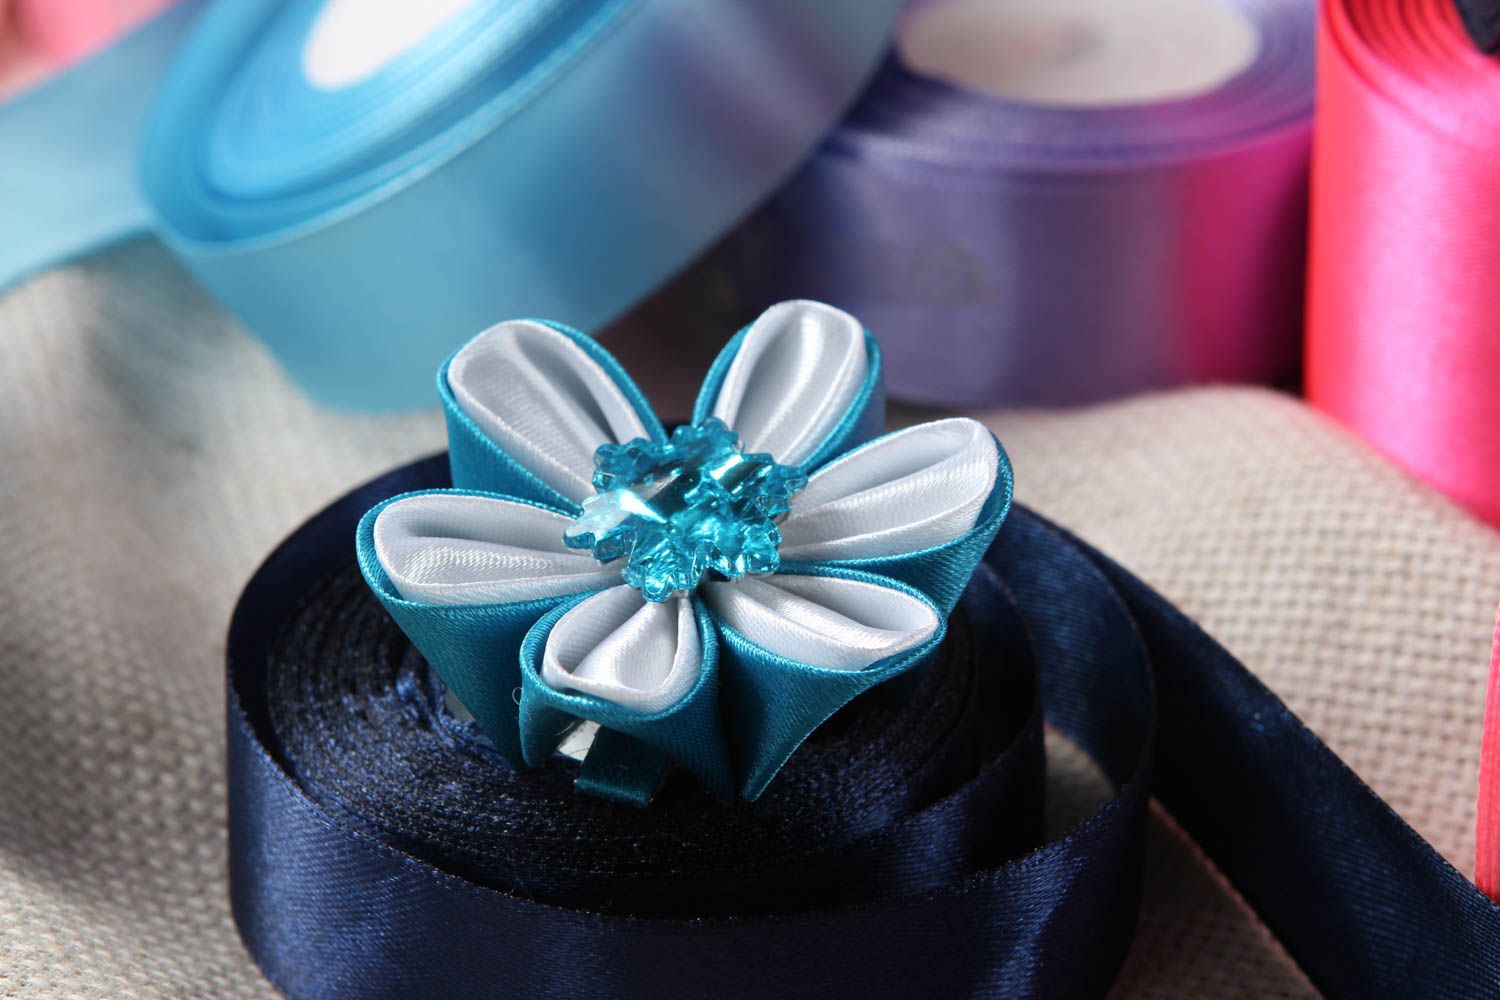 Handmade hair clips designer hair accessory gift ideas unusual gift for girls photo 1